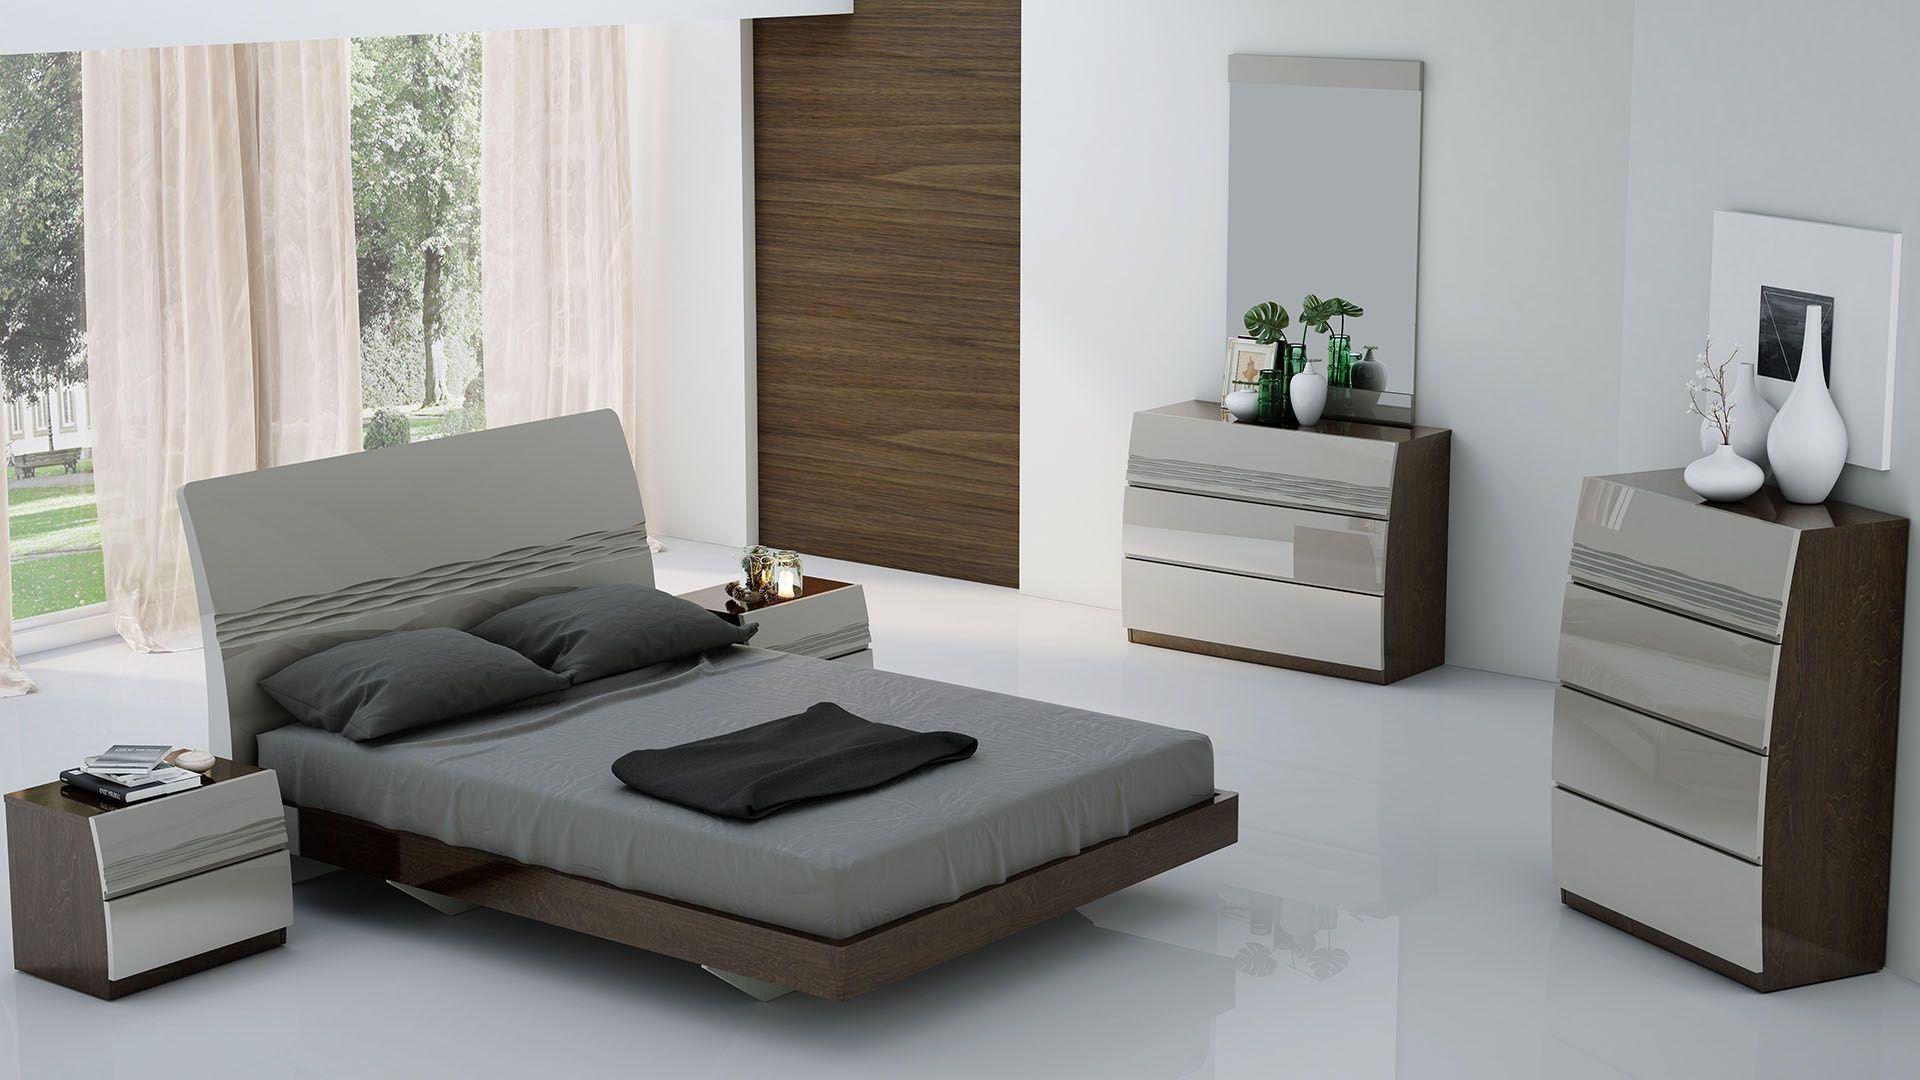 

                    
American Eagle Furniture B-P102-Q Platform Bed Light Gray/Brown  Purchase 
